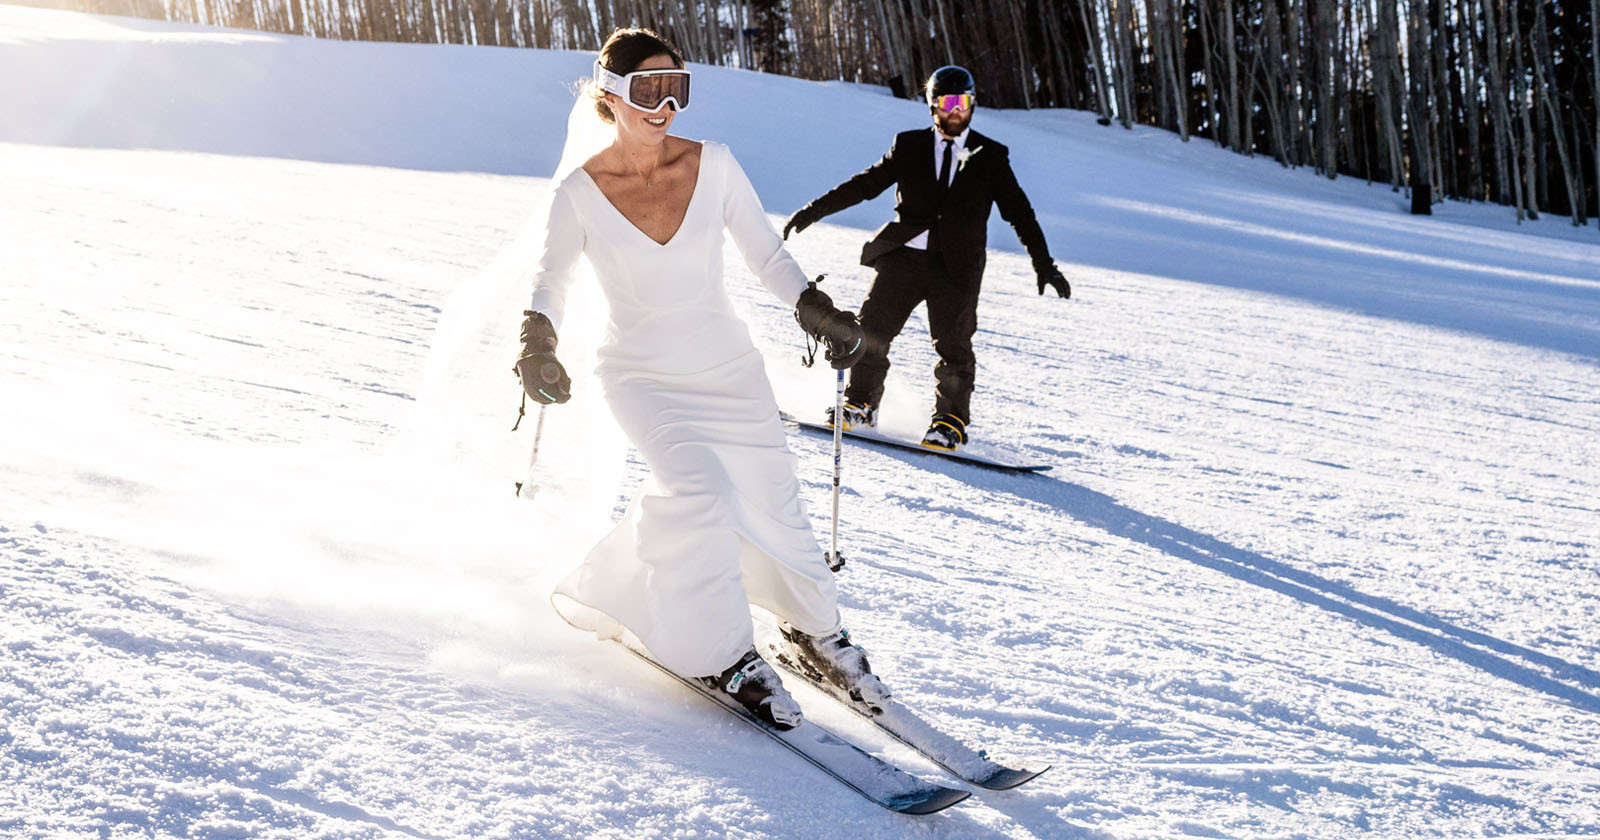 Ski Wedding Photographer Finds Niche Shooting Newlyweds on Slopes